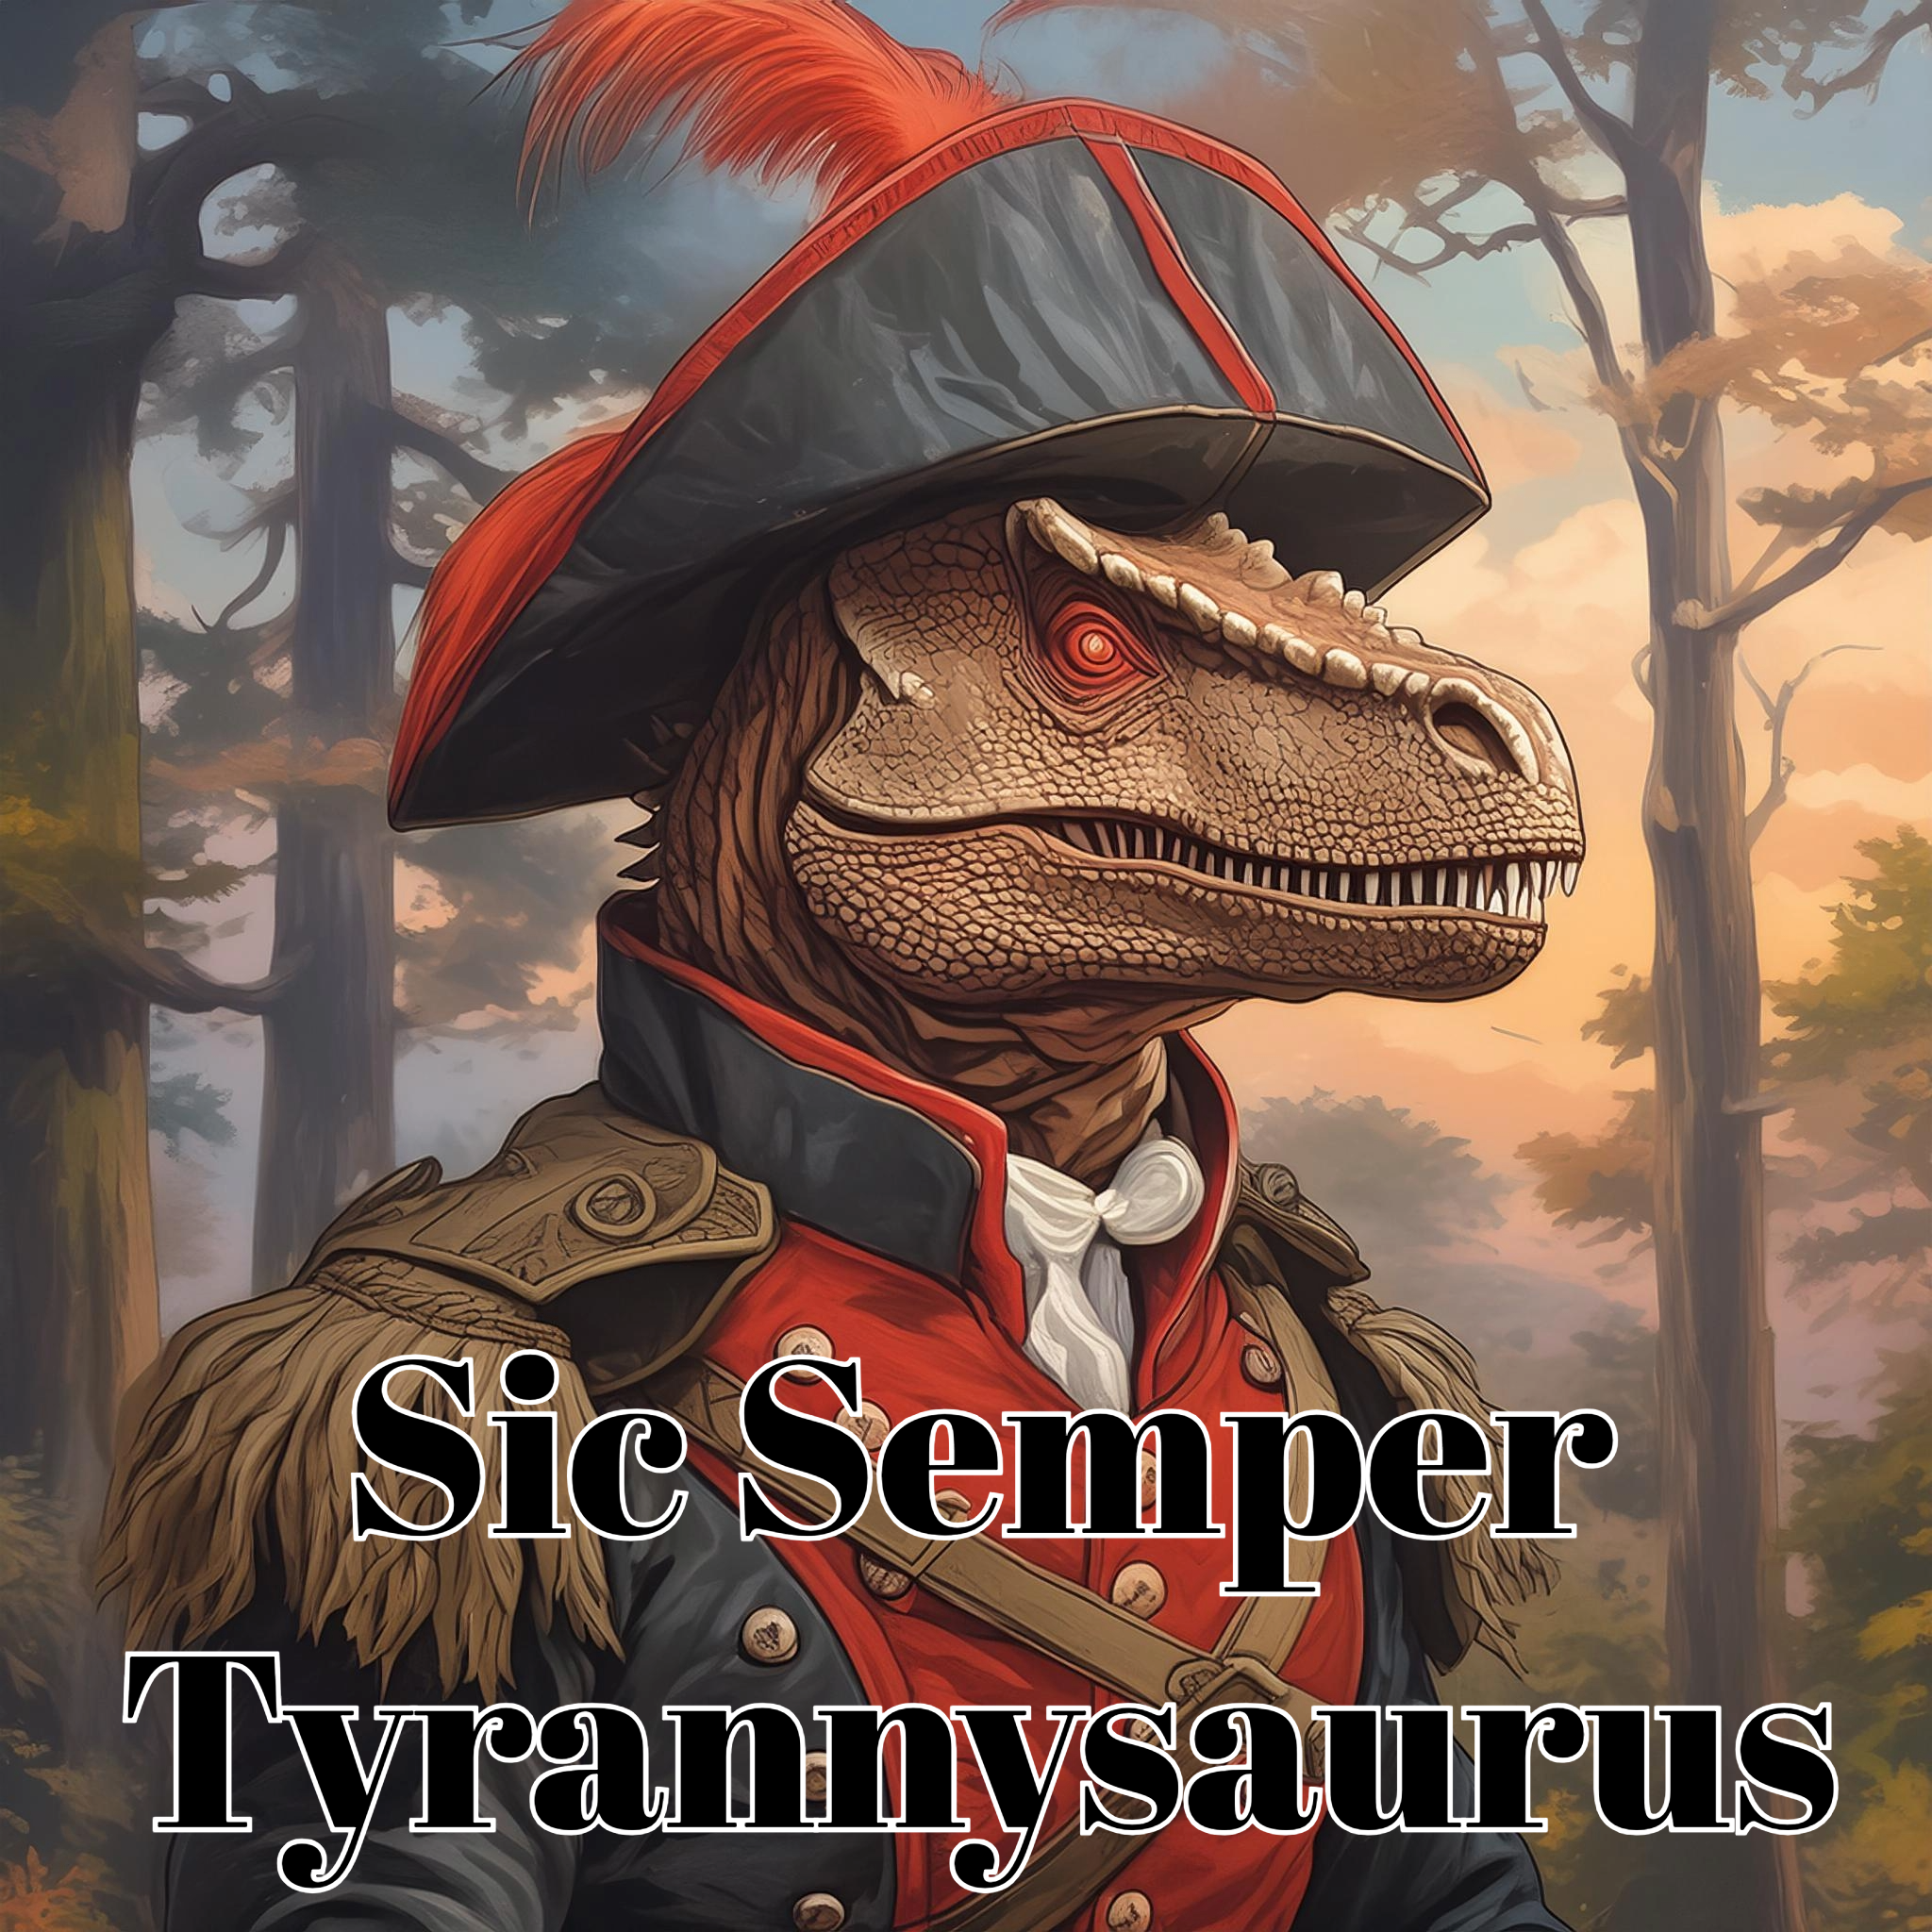 Illustration of T-Rex in uniform with the text Sic Semper Tyrannysaurus